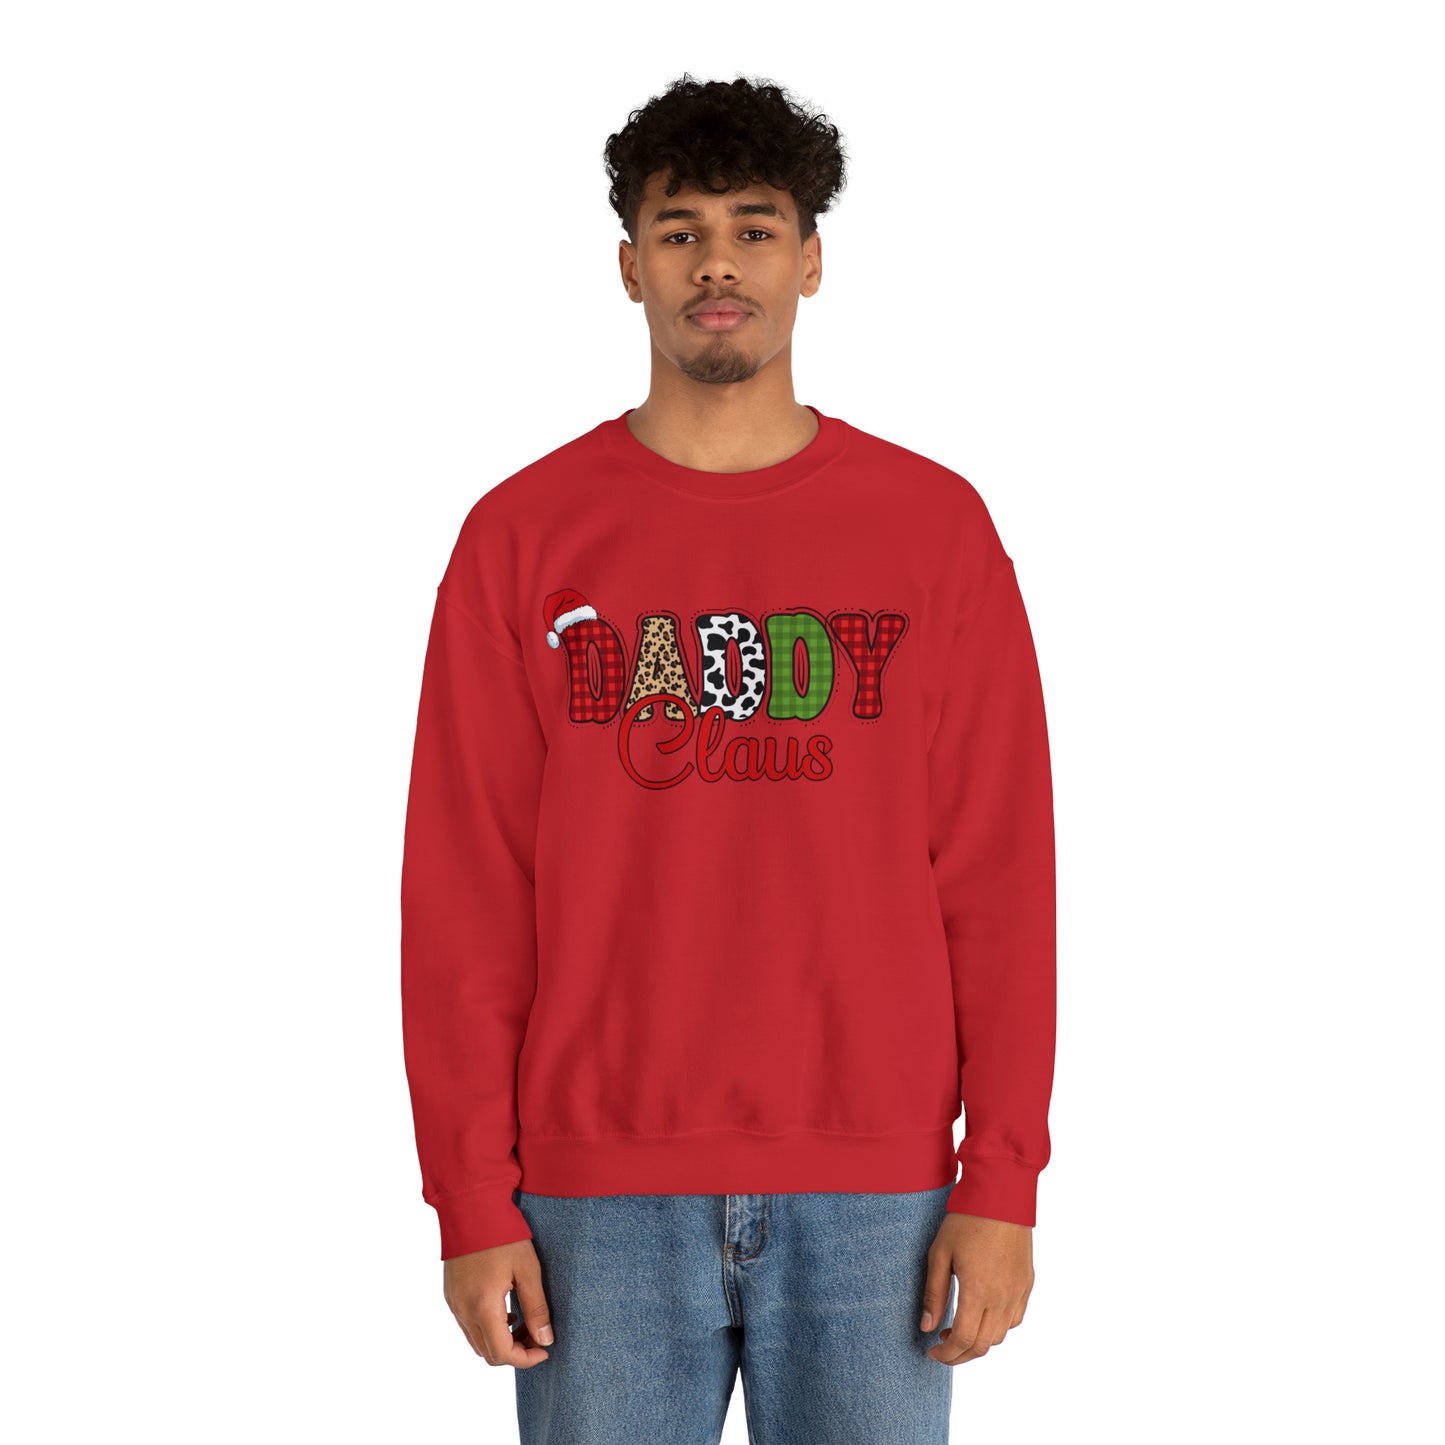 Daddy Claus Christmas | Crewneck Sweatshirt | Family Christmas Sweatshirt